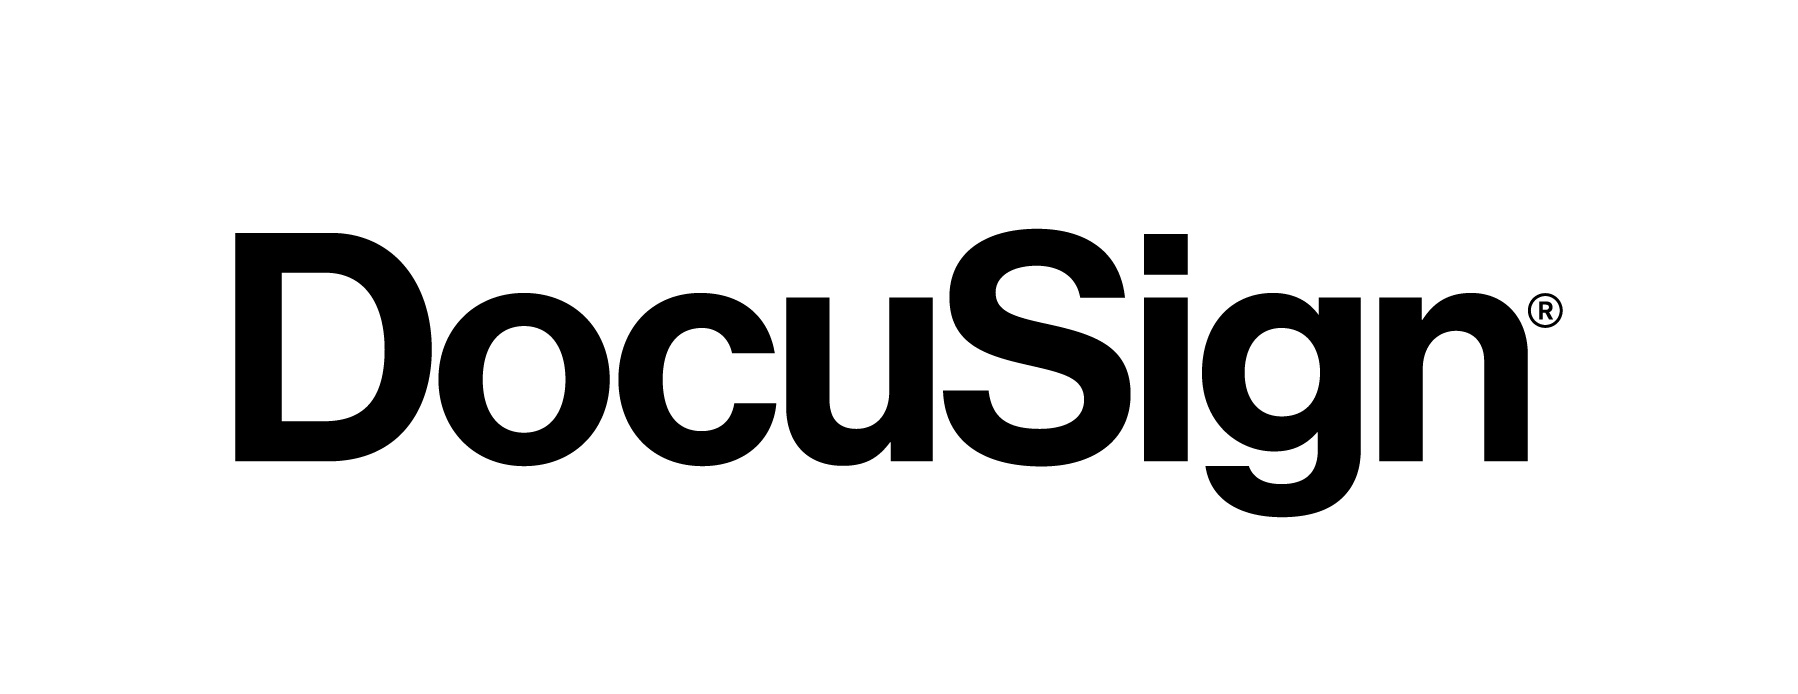 DocuSign's logo